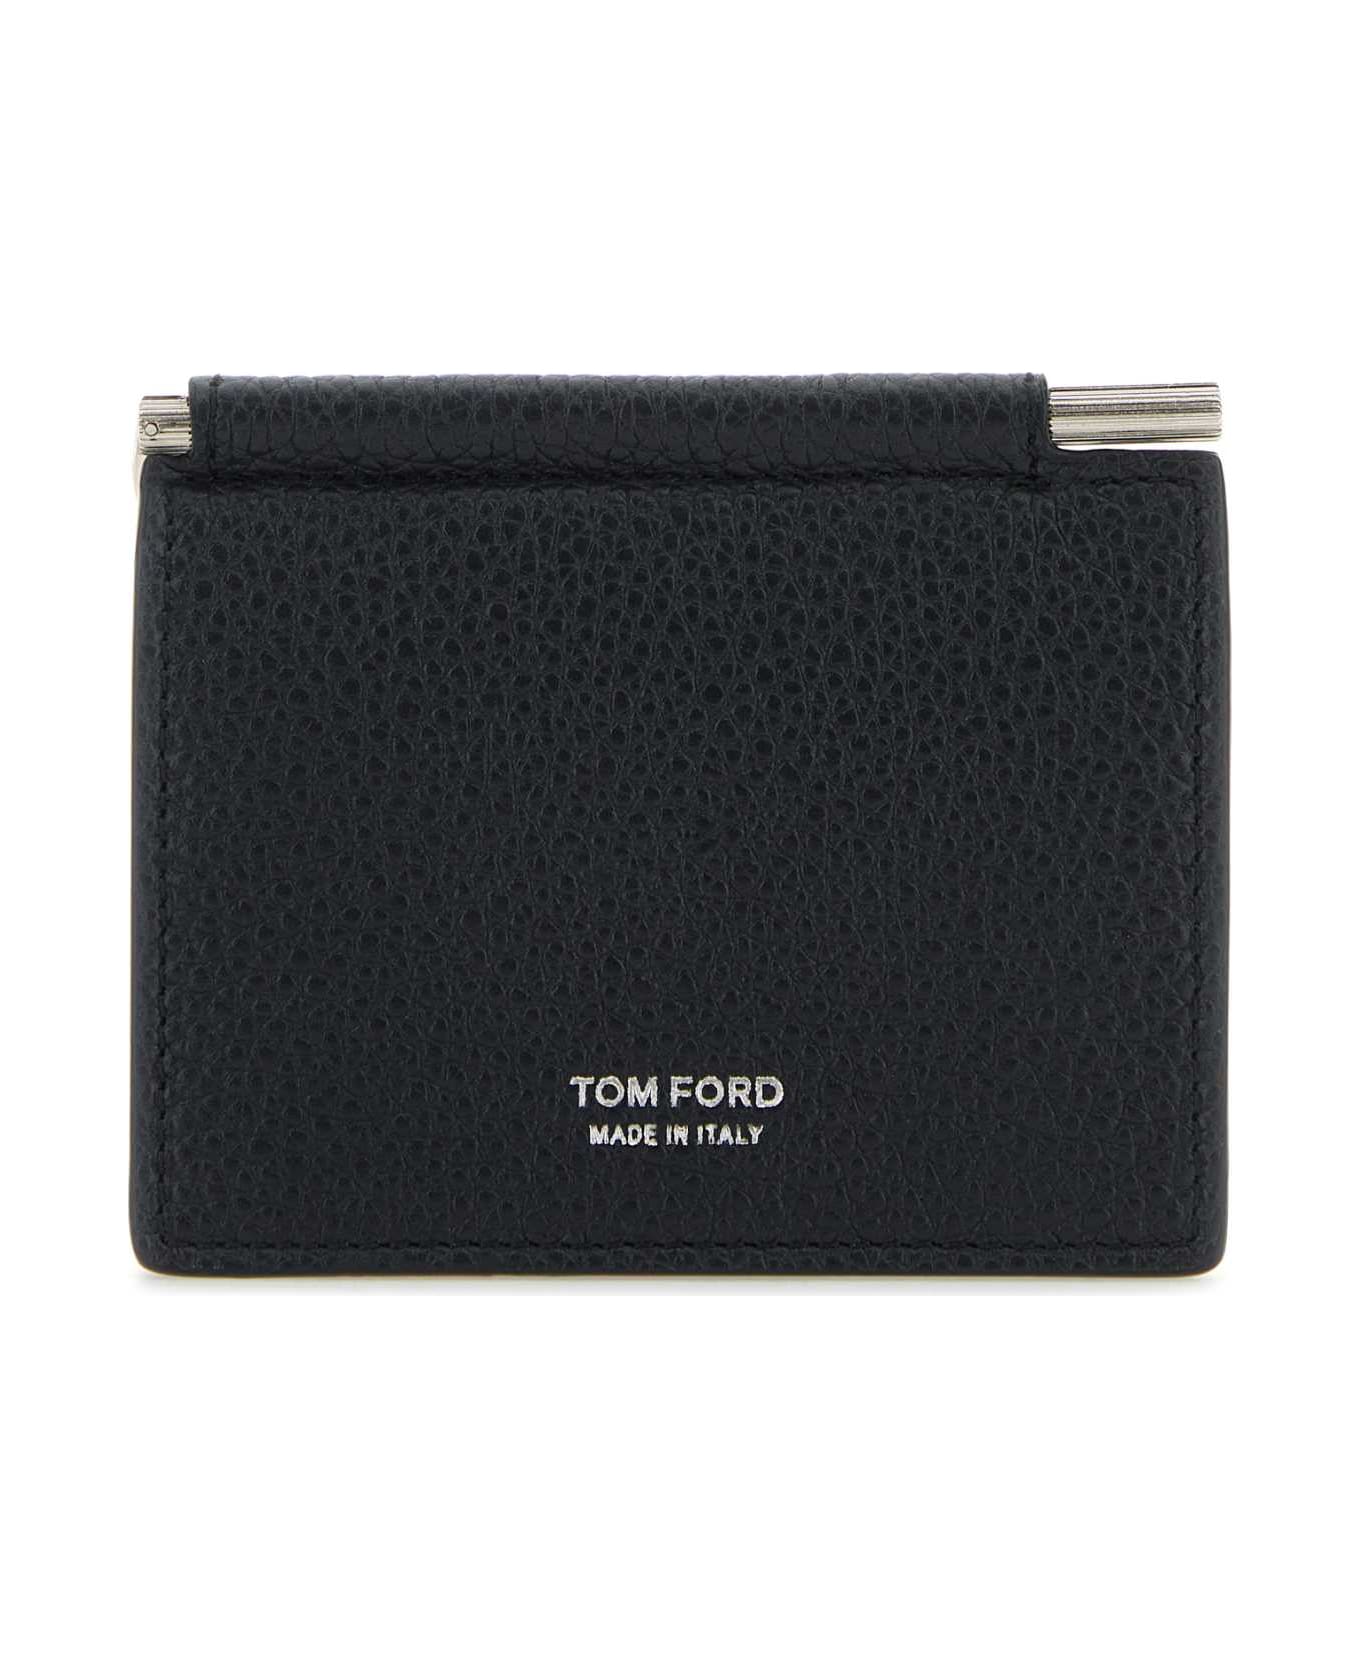 Tom Ford Black Leather Card Holder - MIDNIGHTBLUE